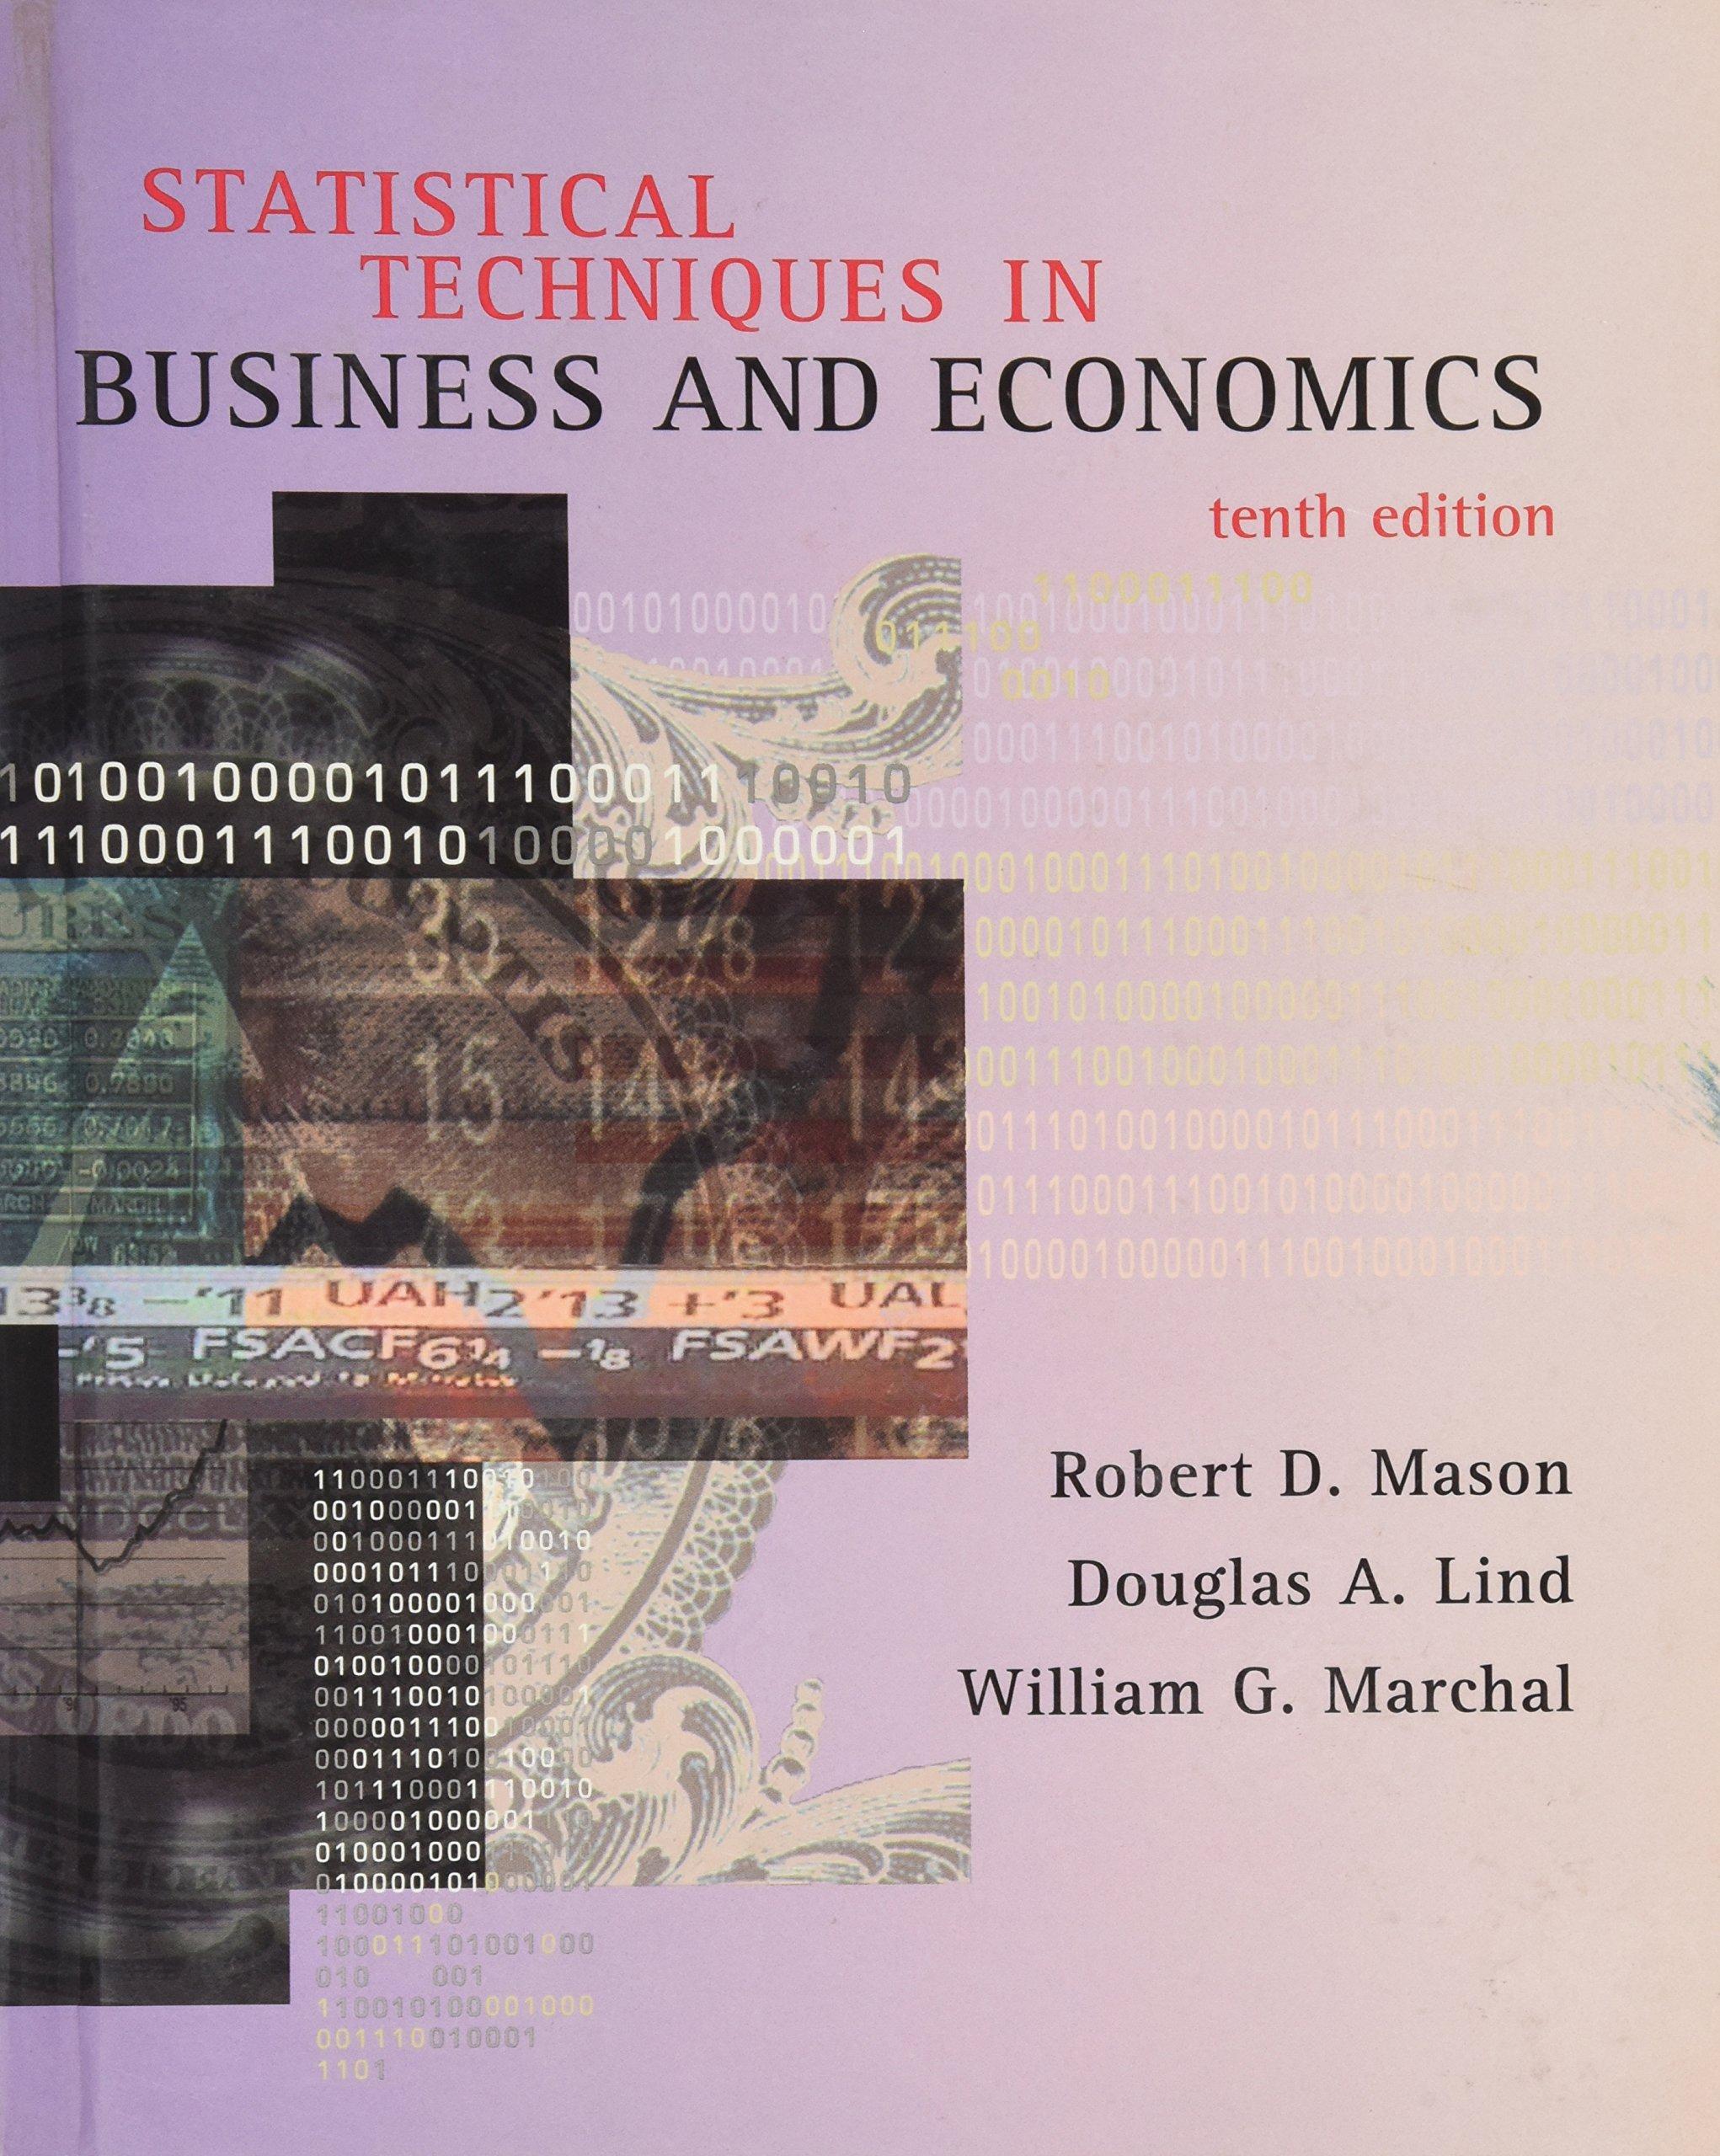 statistical techniques in business and economics 10th edition robert deward mason, douglas a. lind, william